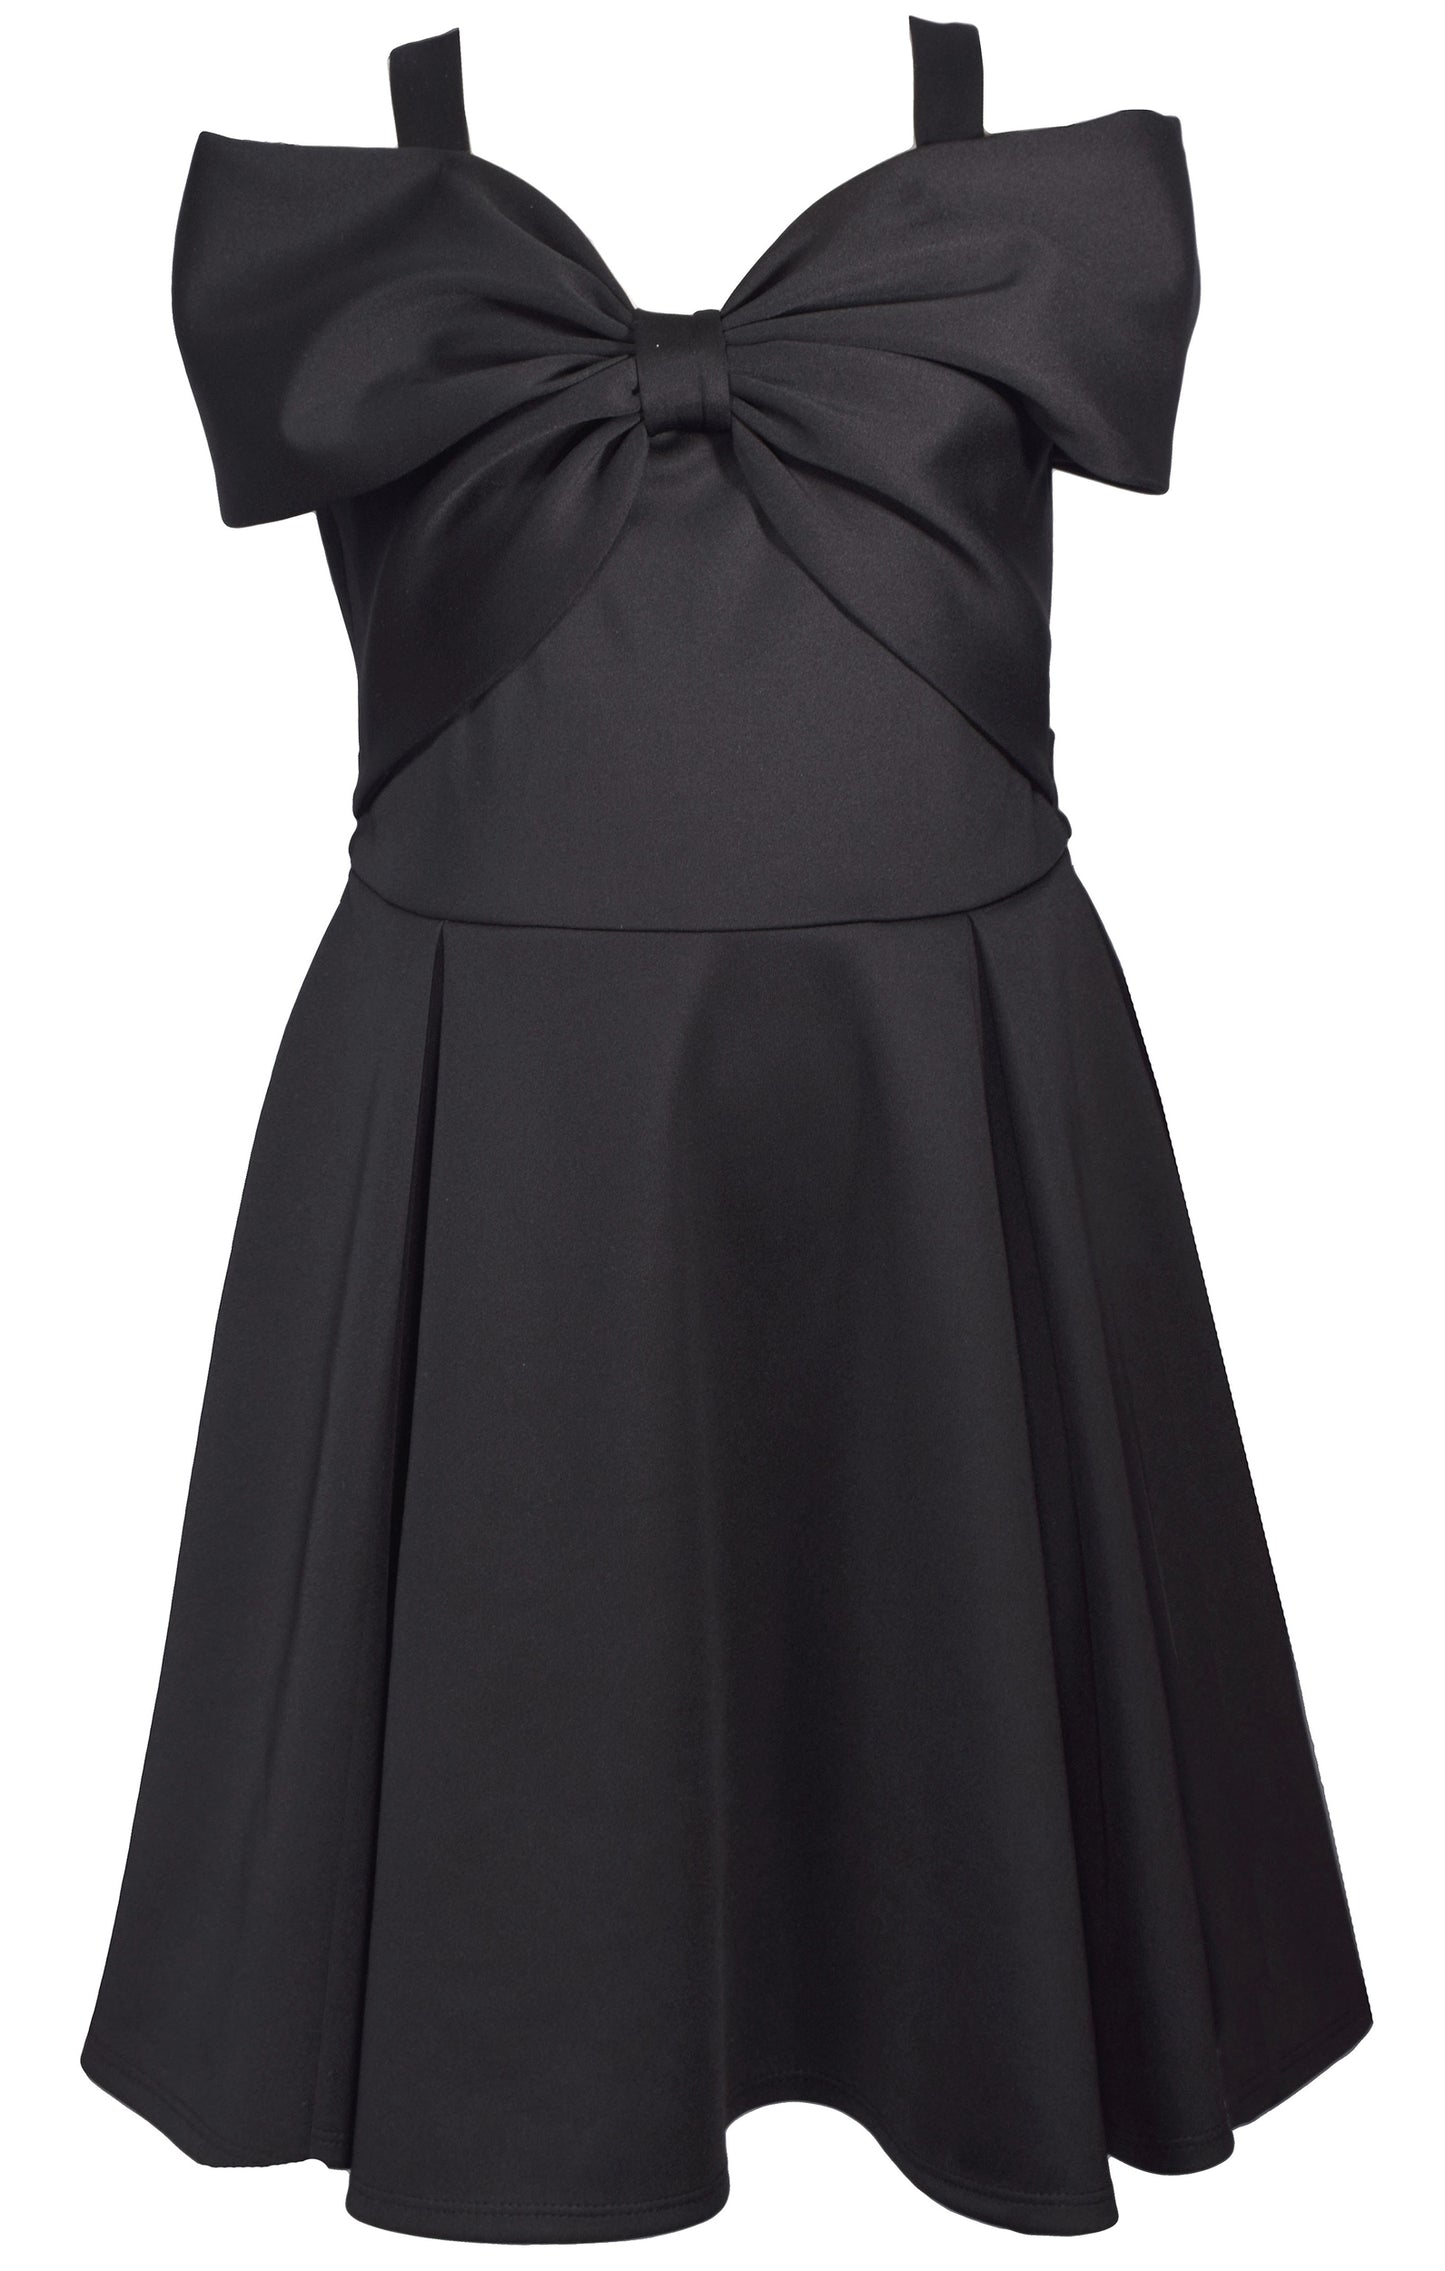 Black Bow Front Dress